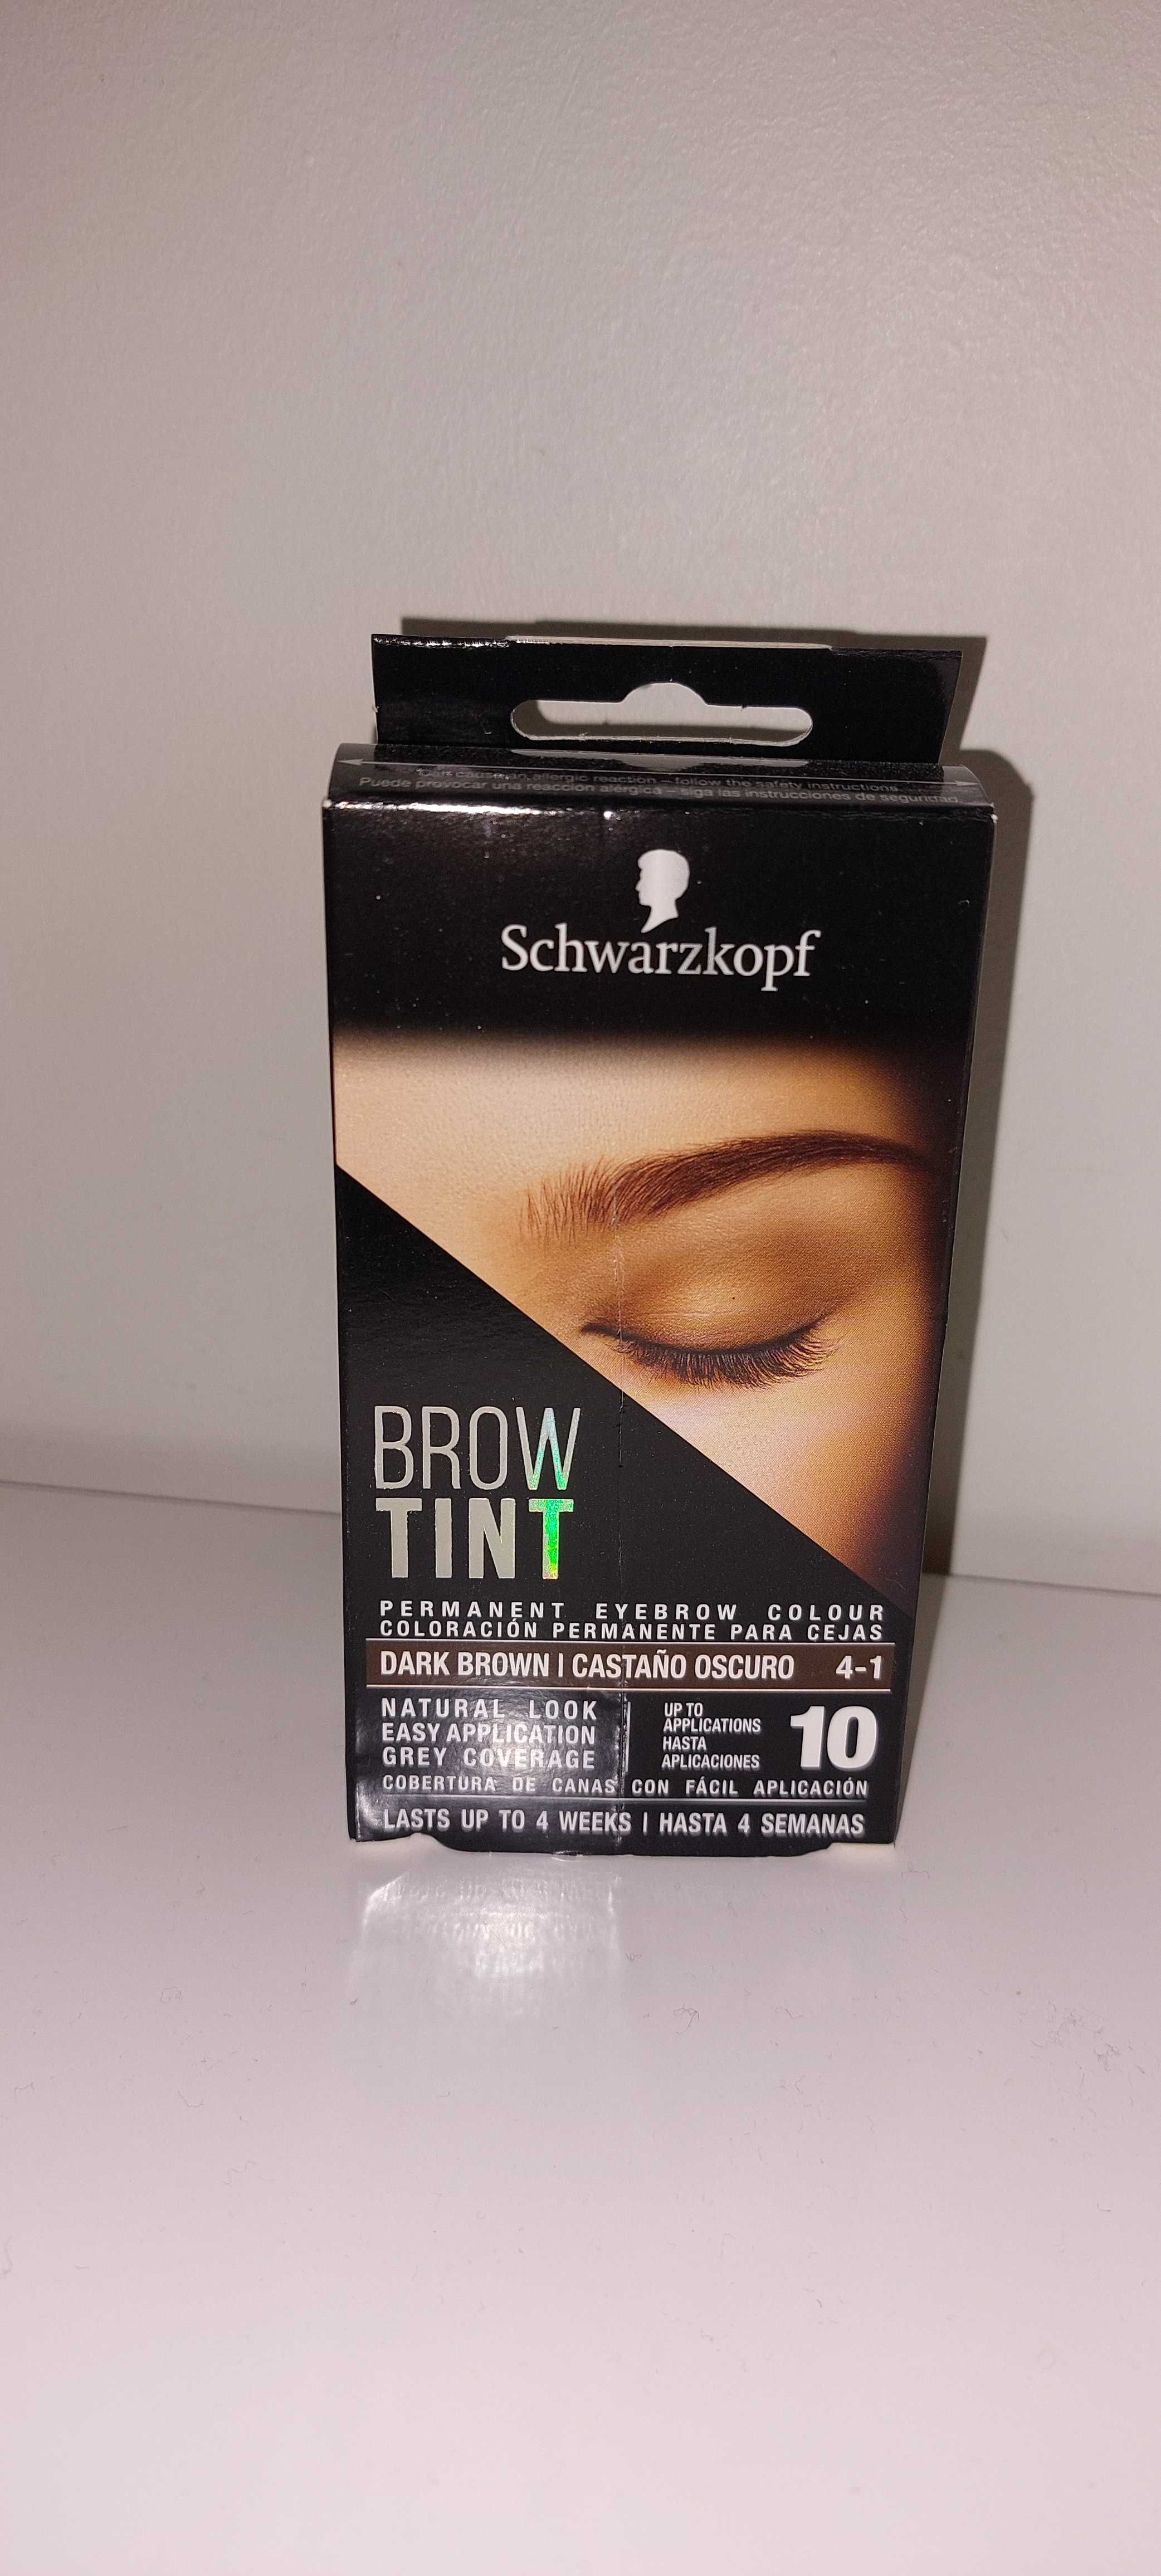 Schwarzkopf Brow Tint 4-1 Dark Brown 17 ml farba do brwi